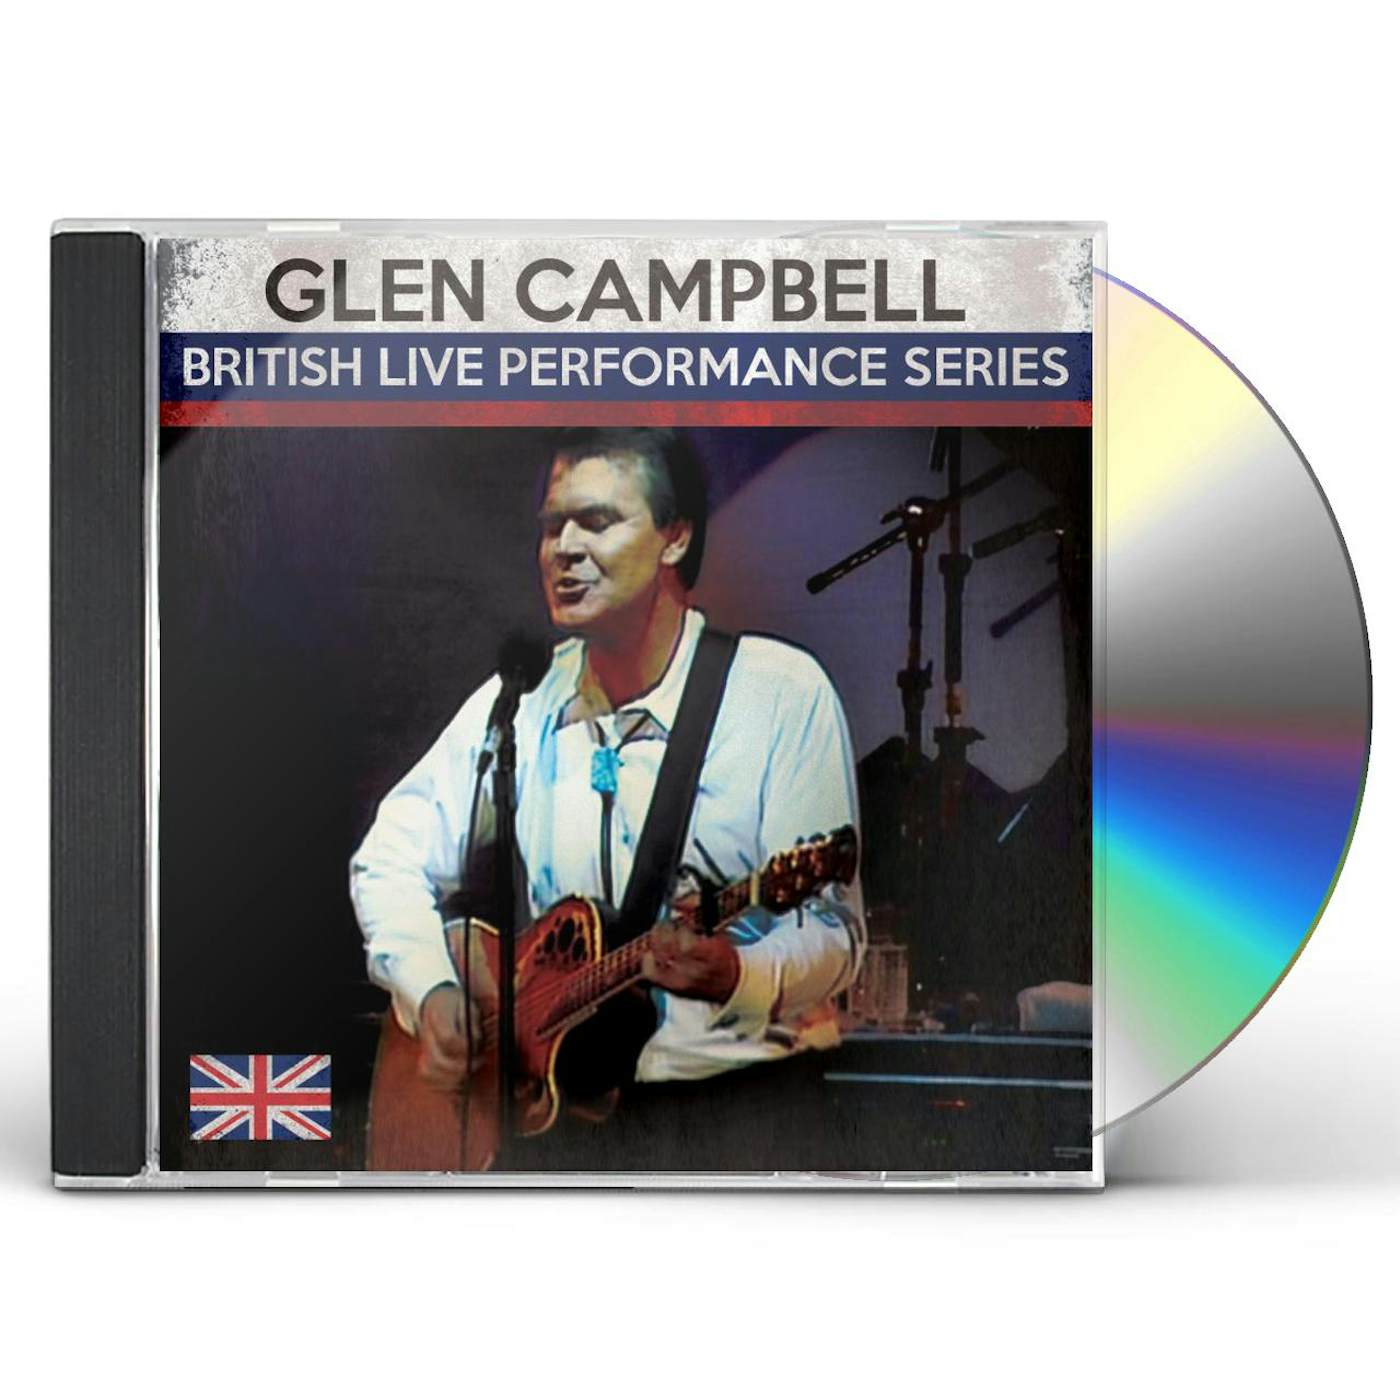 Glen Campbell BRITISH LIVE PERFORMANCE SERIES CD